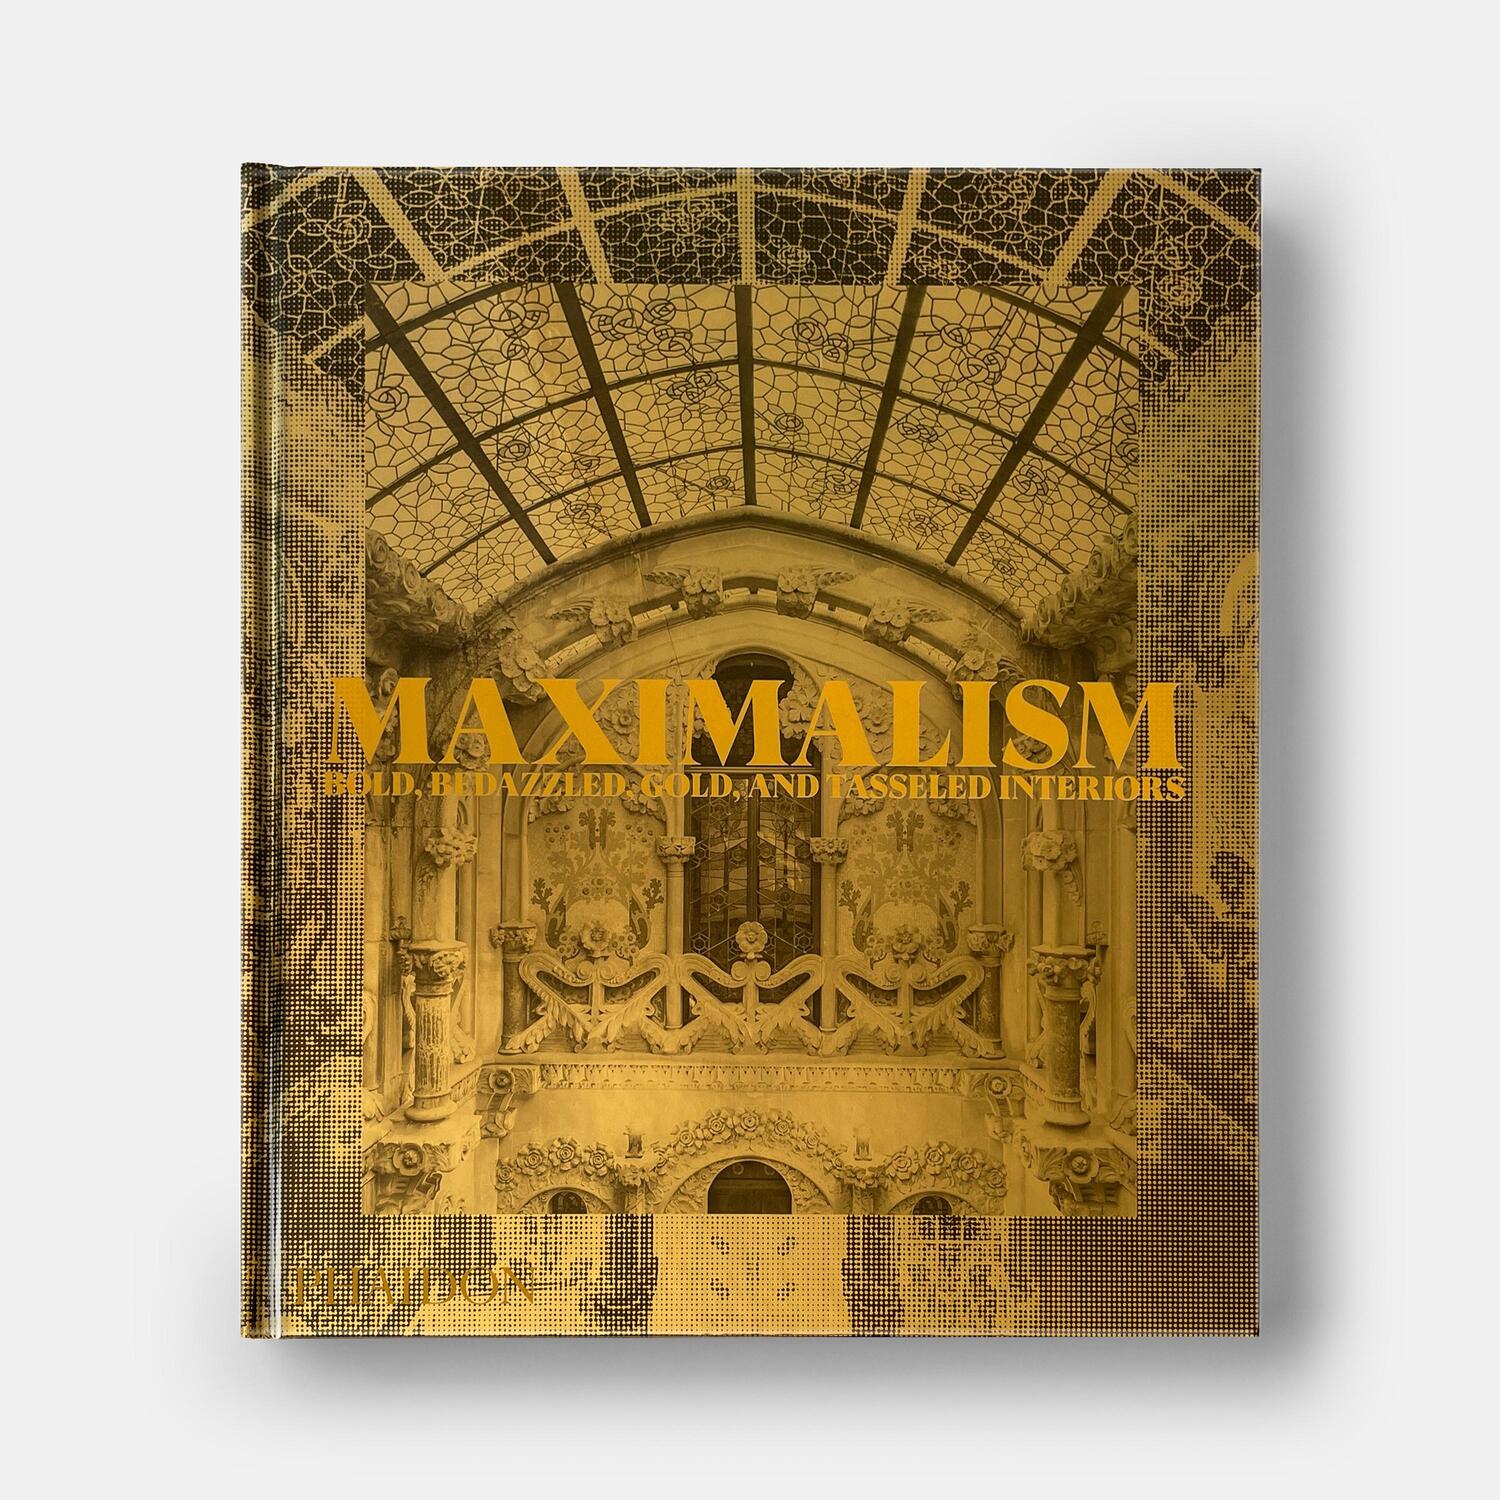 Bild: 9781838666927 | Maximalism | Bold, Bedazzled, Gold, and Tasseled Interiors | Editors